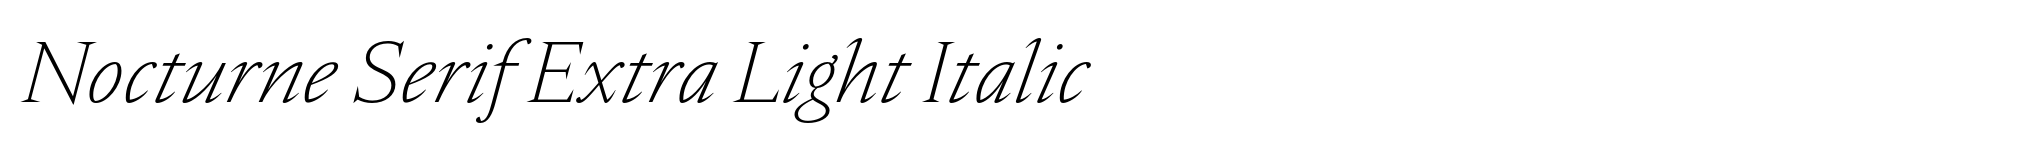 Nocturne Serif Extra Light Italic image